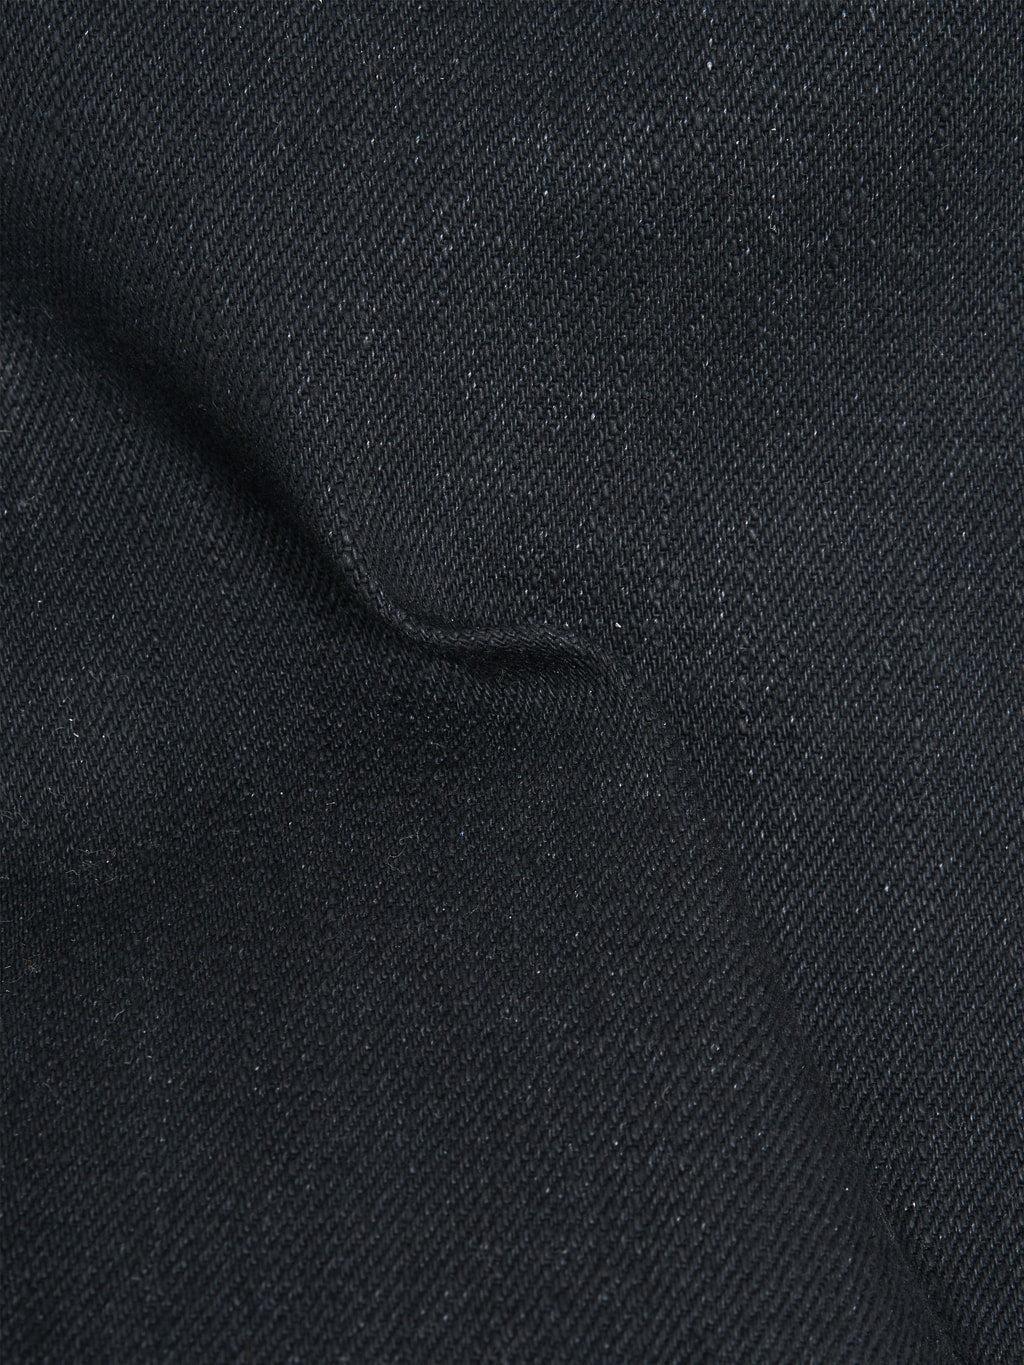 Freenote Cloth Avila 17oz Black Denim Slim Taper Jeans texture